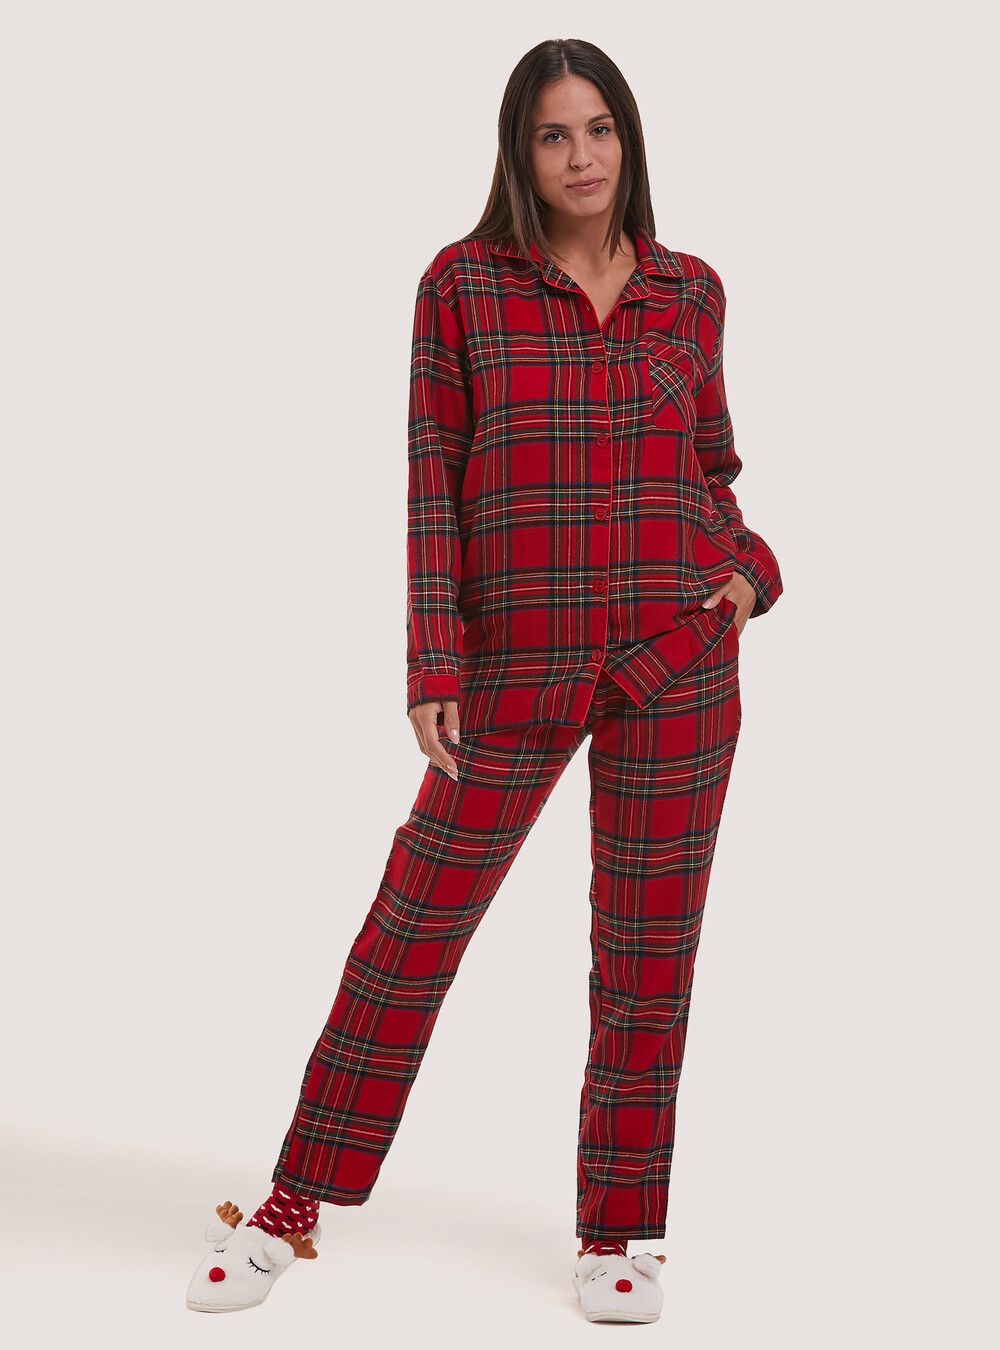 Pyjama Fille Victoire ecossais - L'orangerie